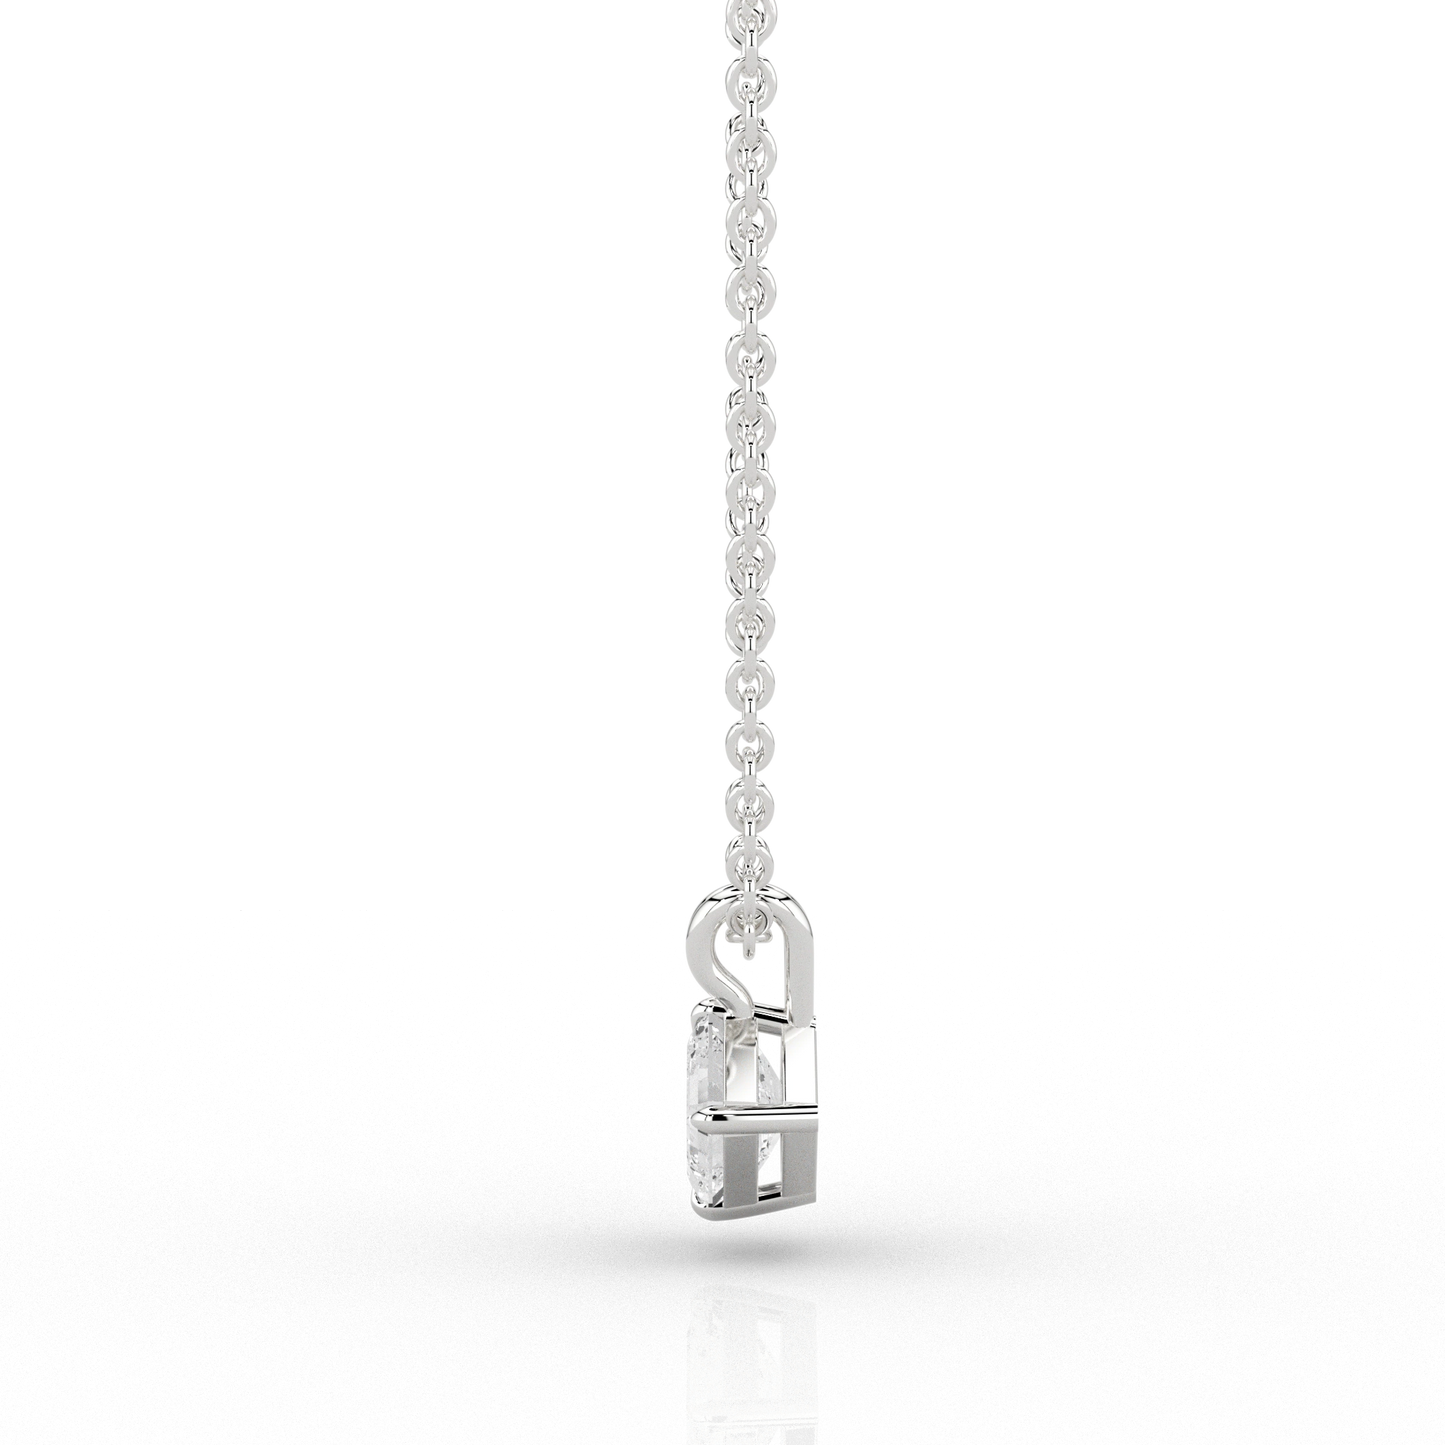 Asscher Cut 0.8ct Diamond Pendant in Recycled Platinum